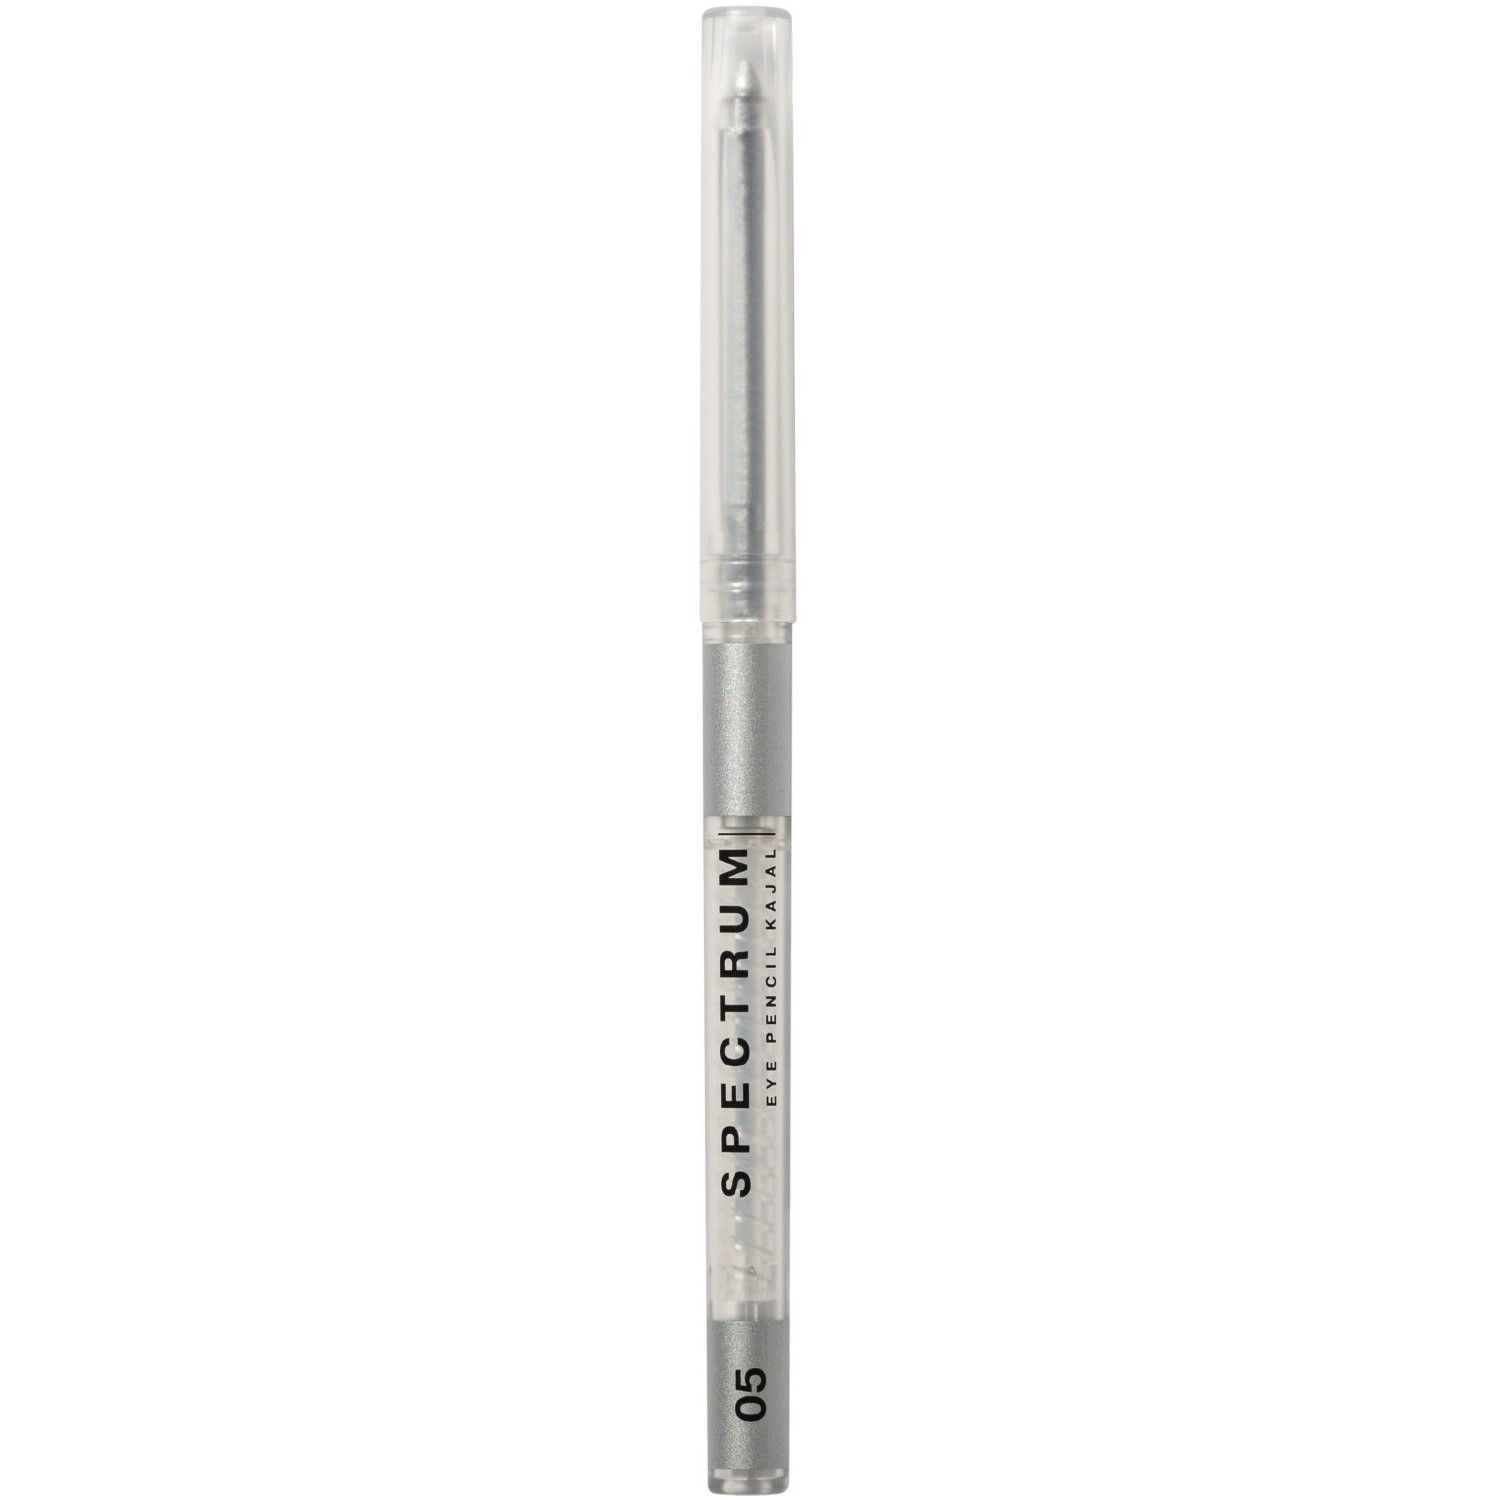 Карандаш для глаз Influence Beauty Spectrum автоматический, гелевый тон 05 0,28 г карандаш для глаз influence beauty spectrum автоматический гелевый тон 10 0 28 г